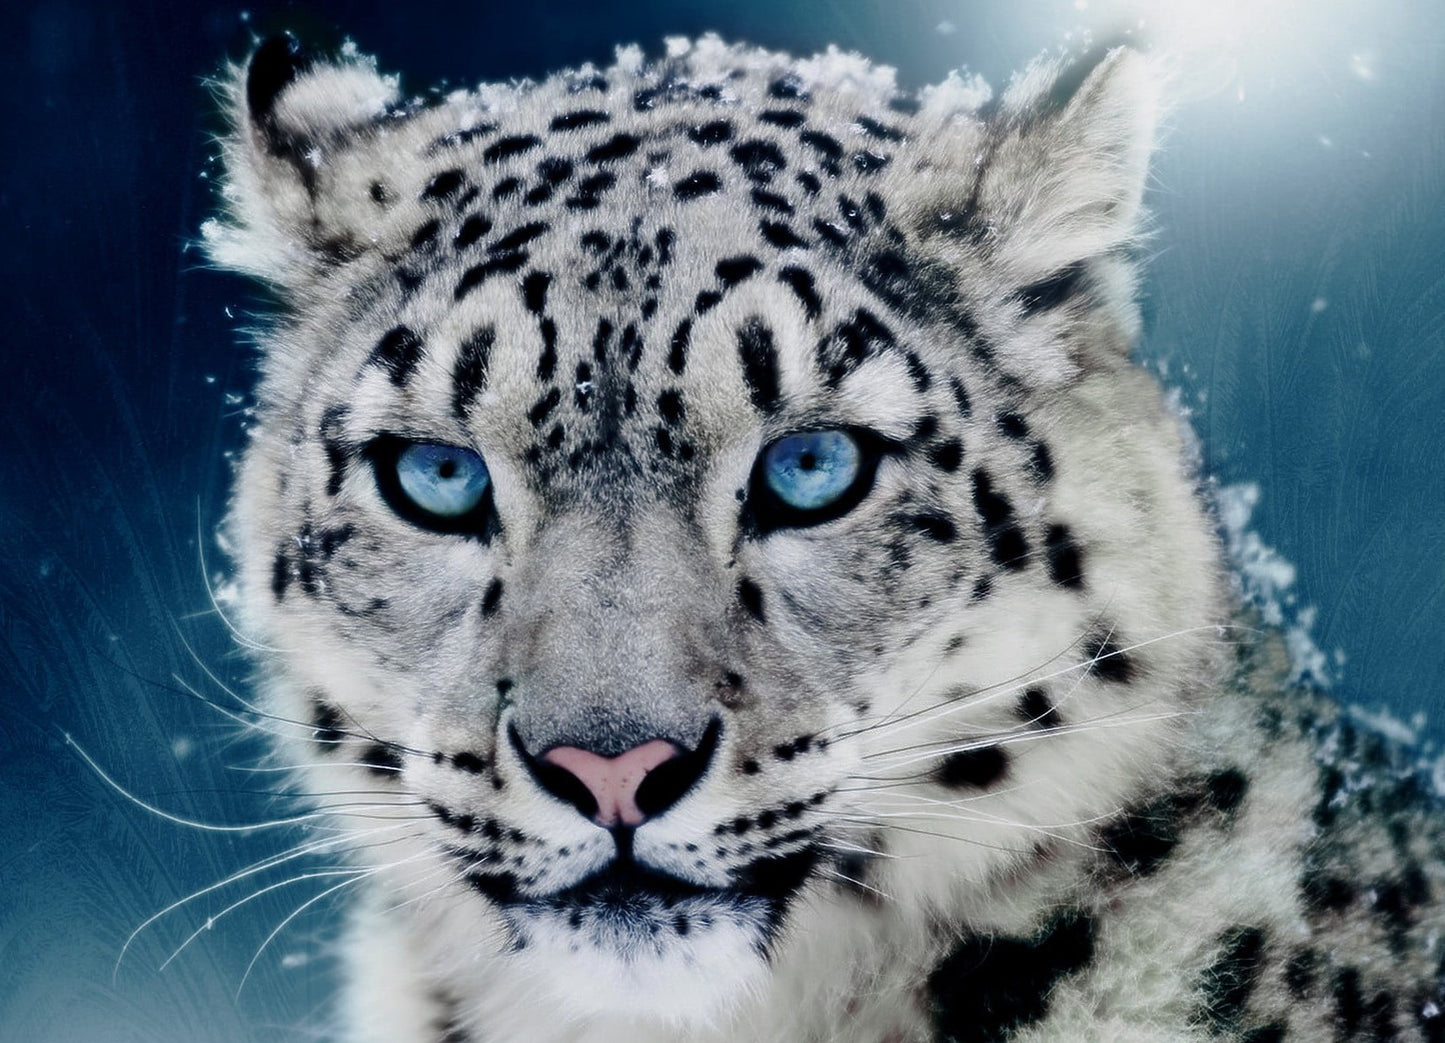 The Diamond Art Of The White Snow Leopard